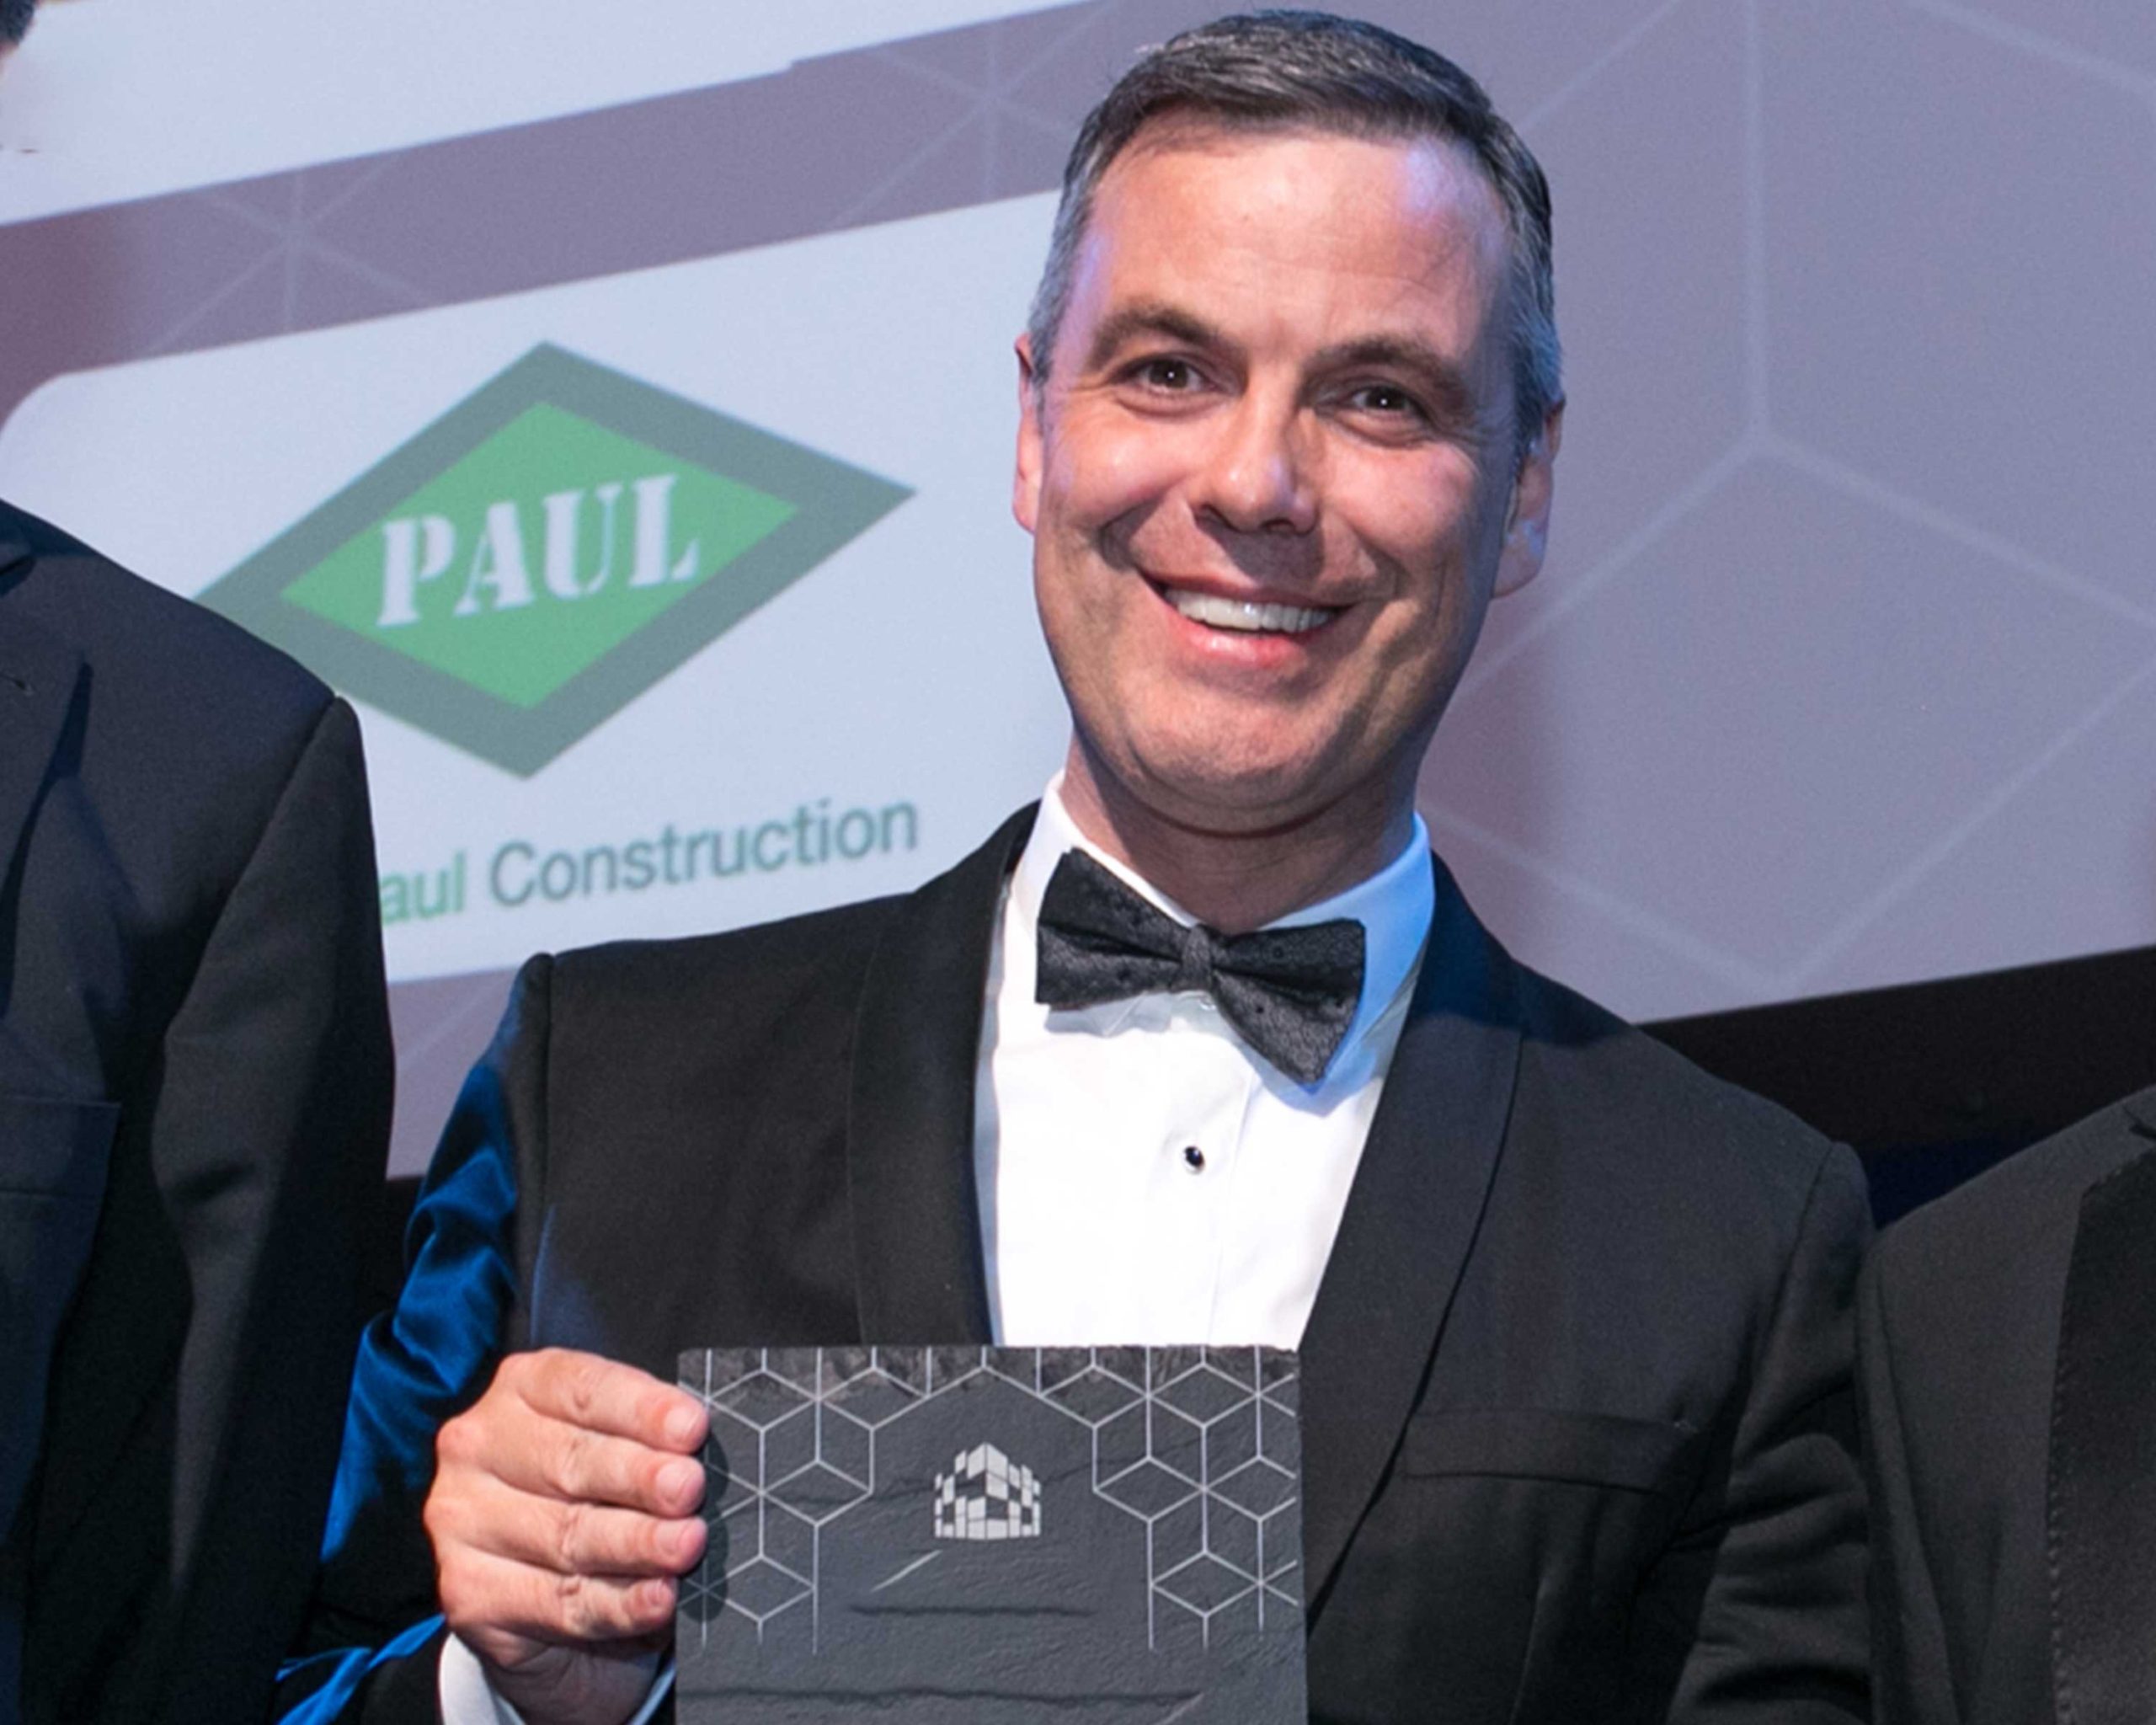 2020 Irish Construction Industry Awards